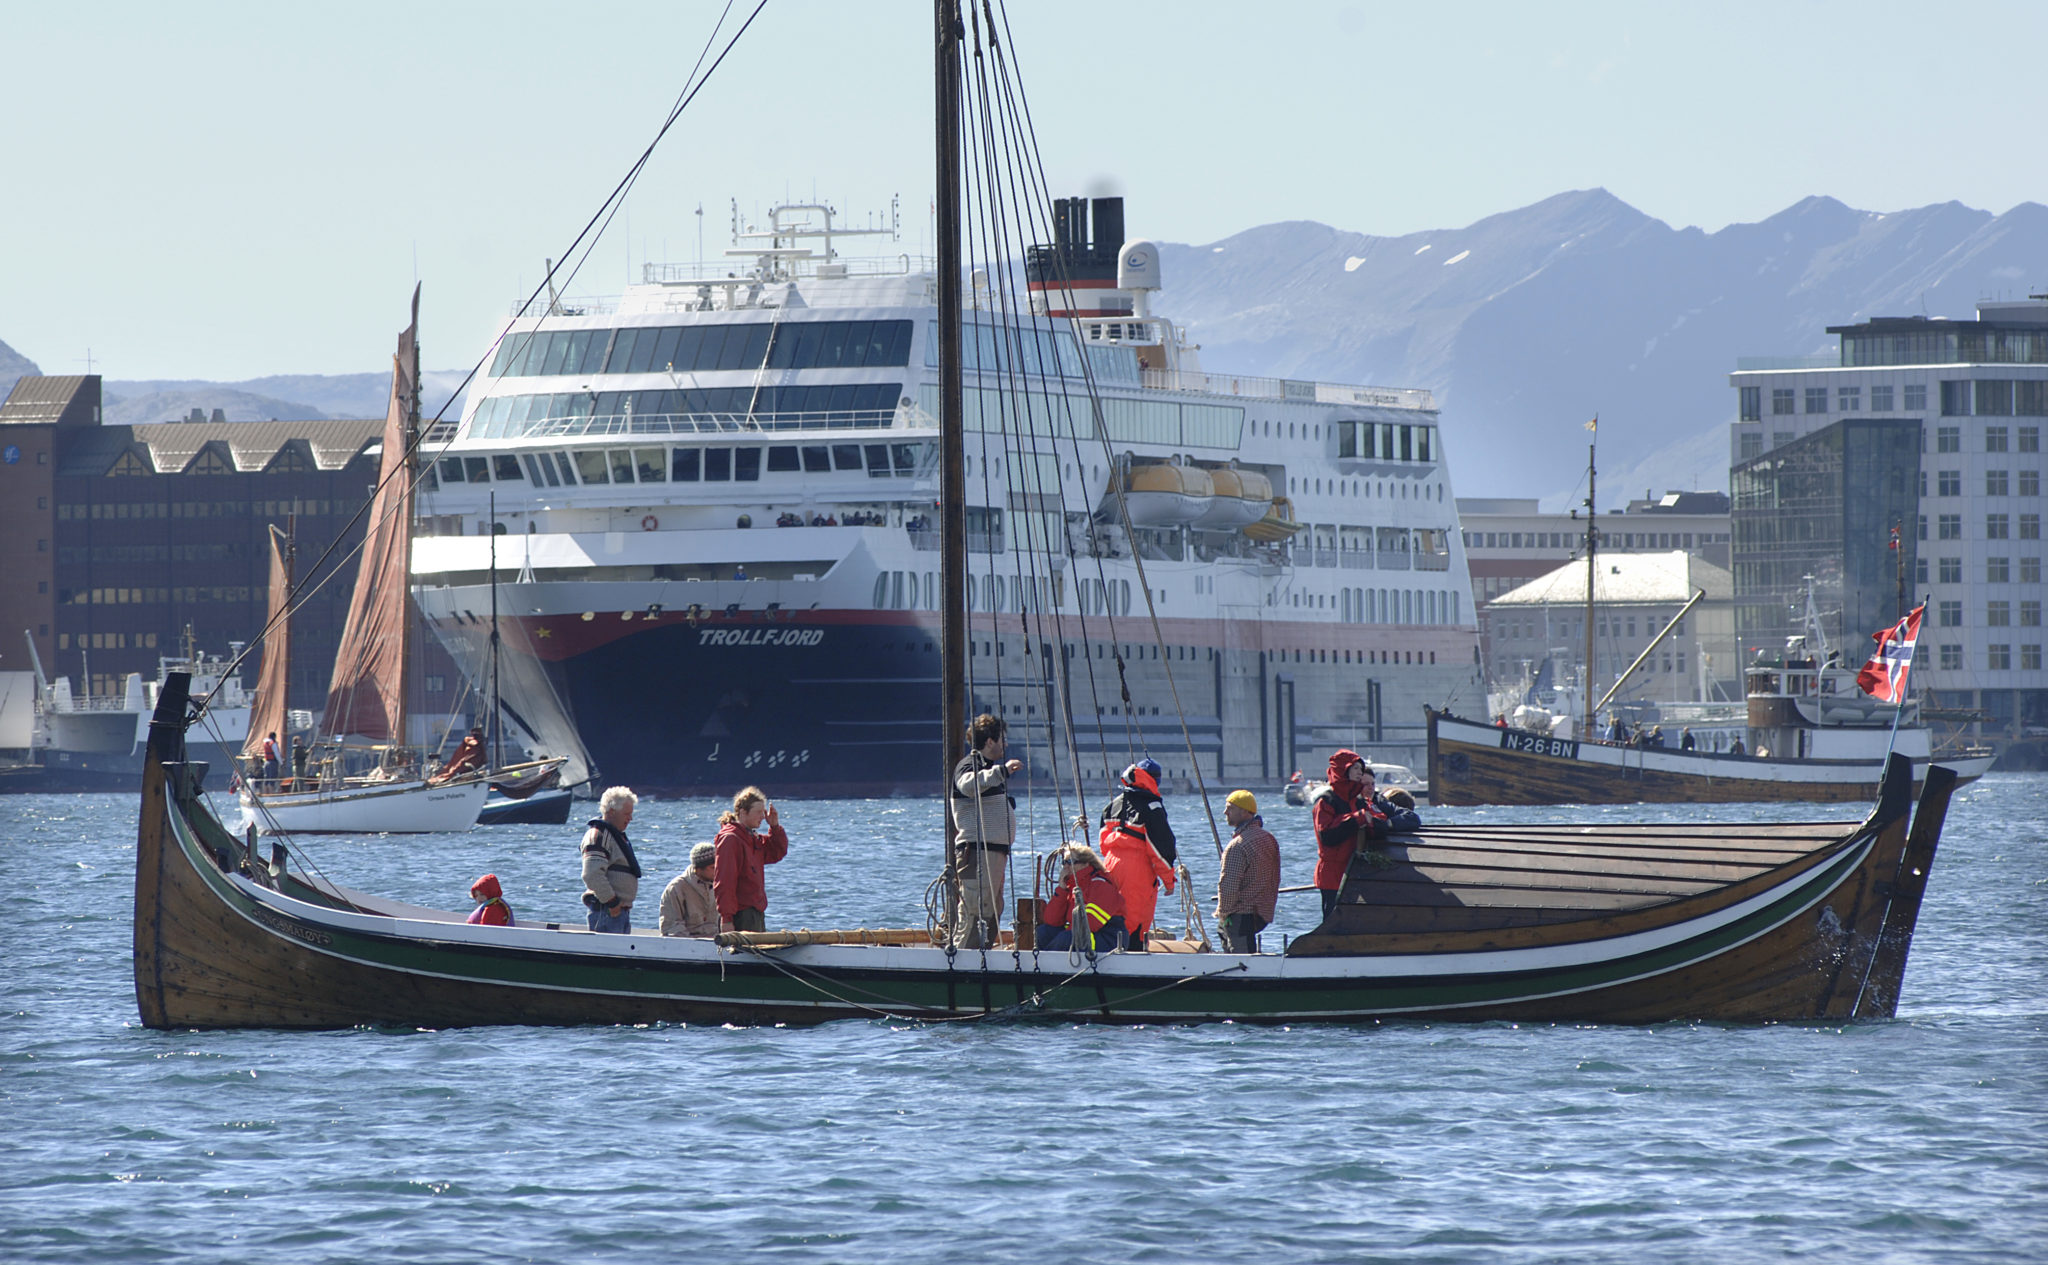 Traditional boats from Nordland and Hurtigruten meet in Bodø harbor. Photo: Ernst Furuhatt / nordnorge.com